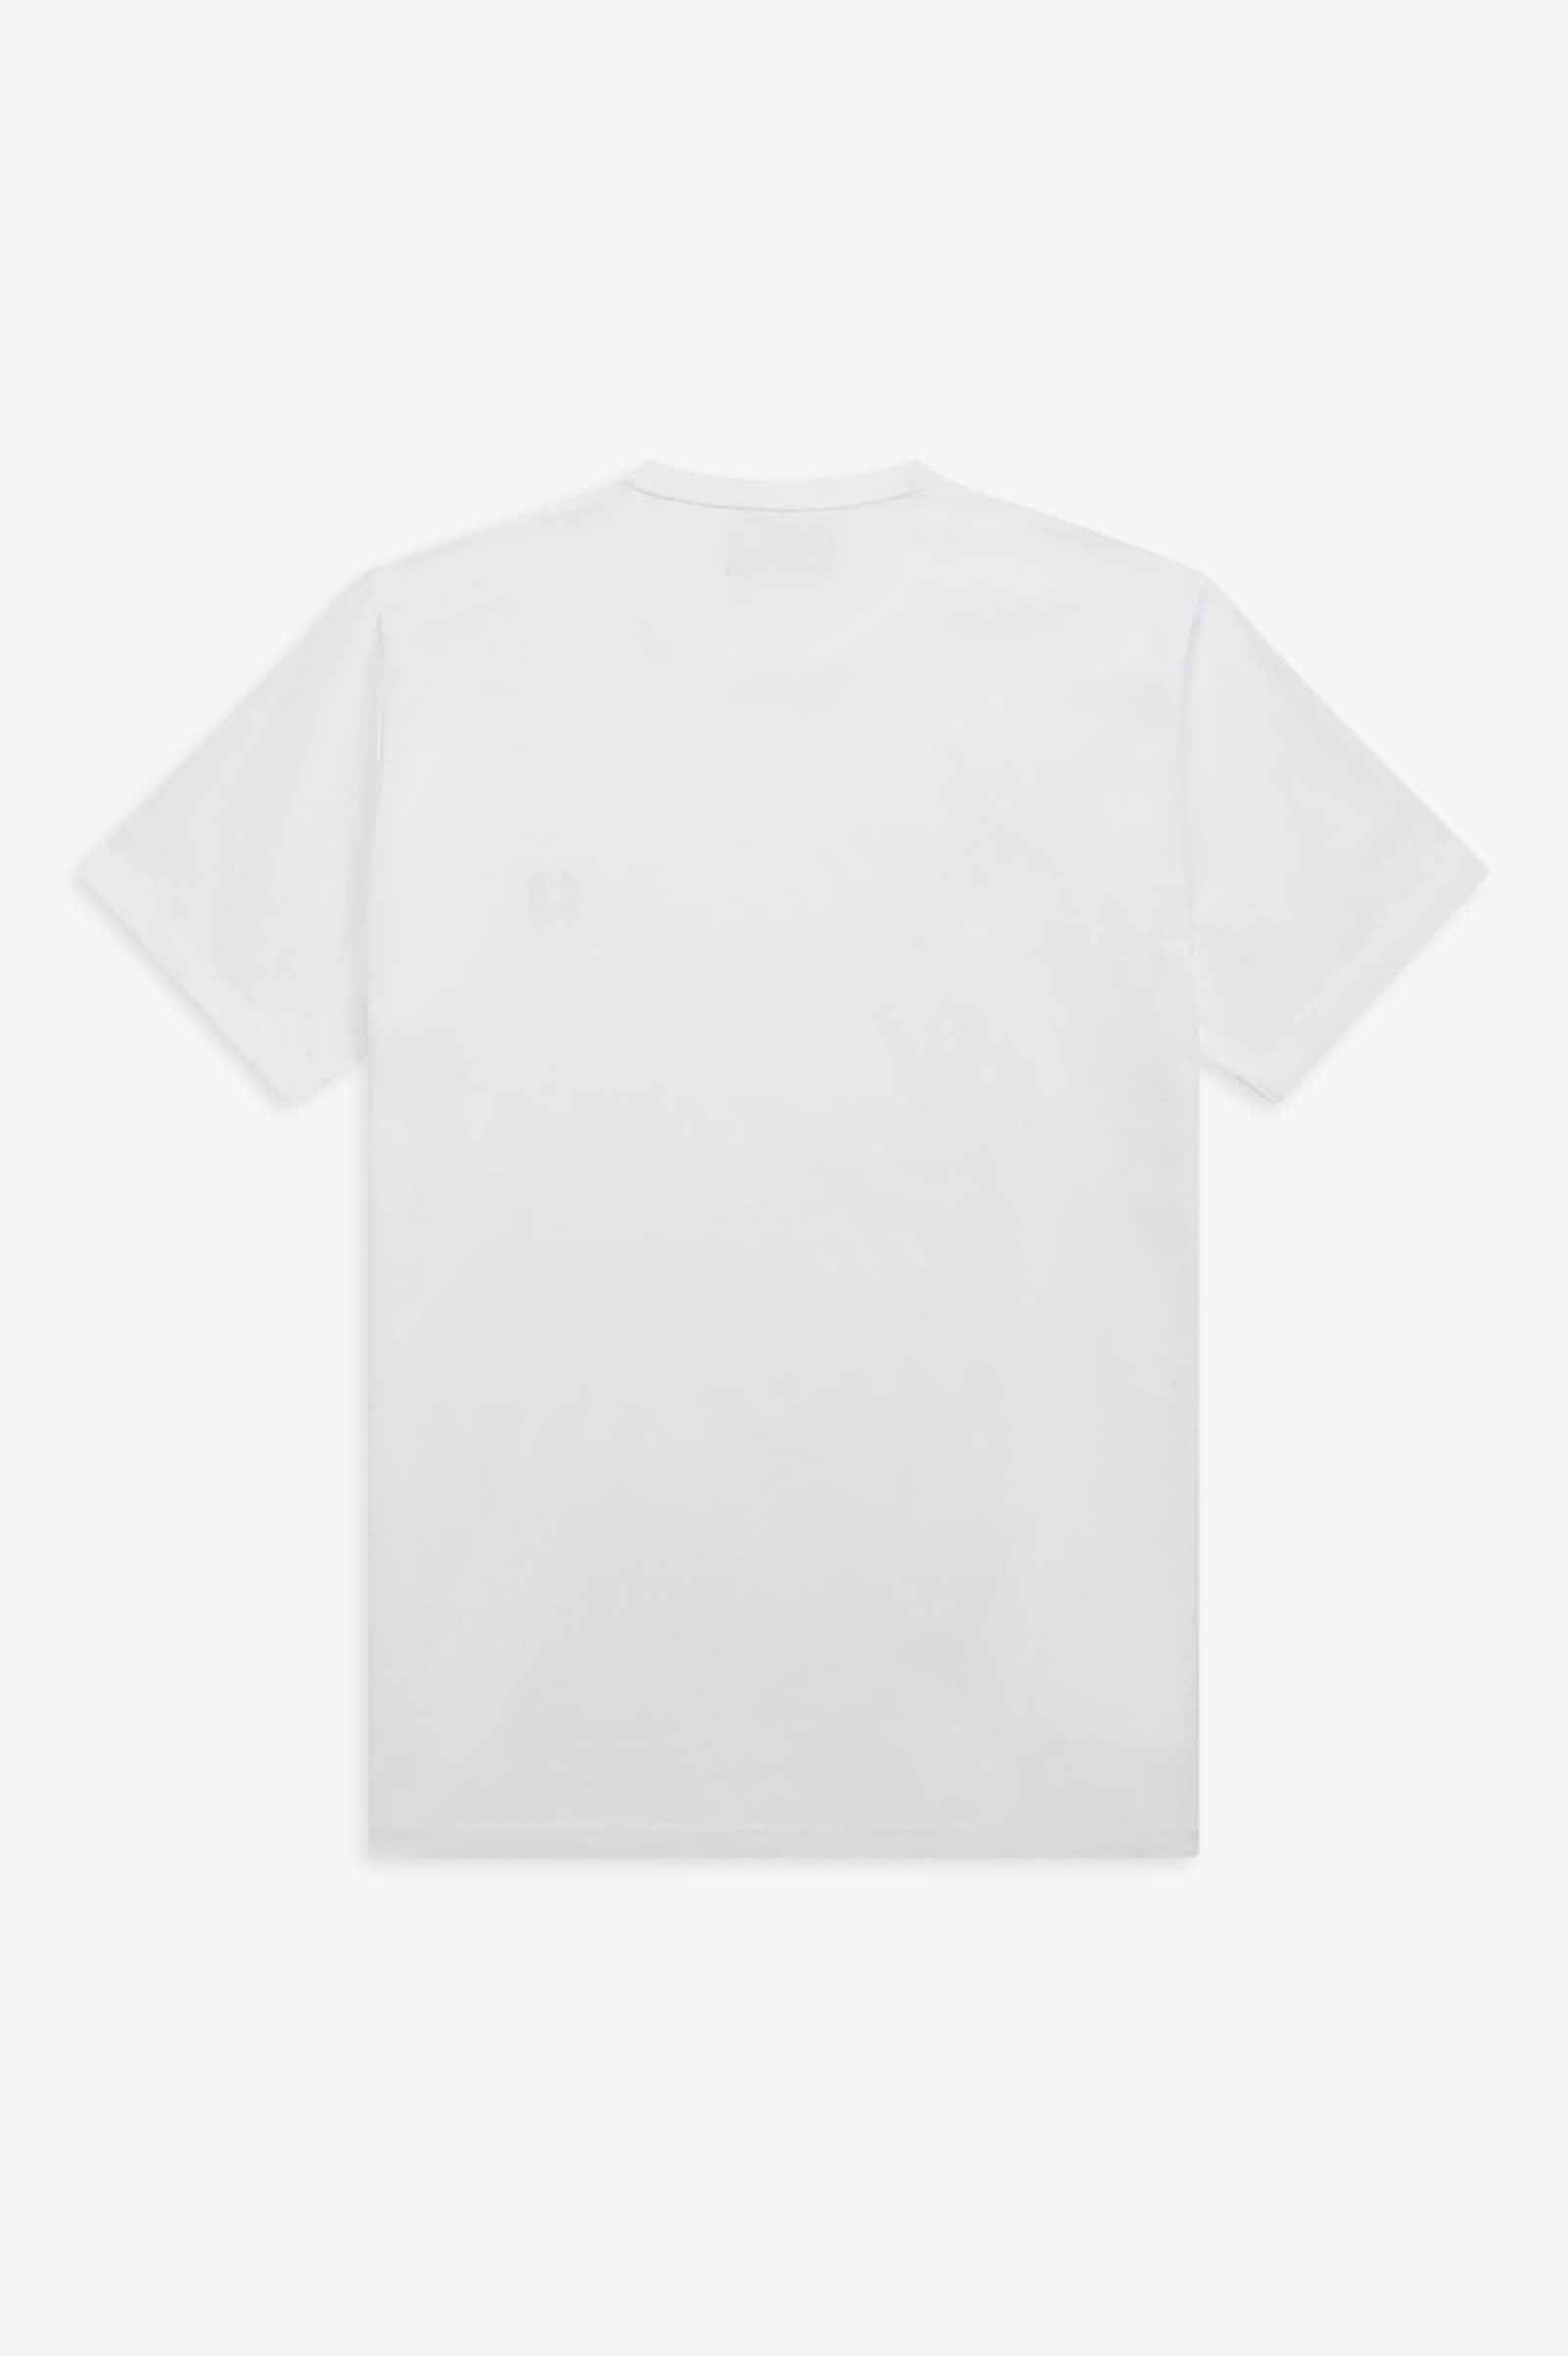 FRED PERRY Ringer T-Shirt Sサイズ ホワイト